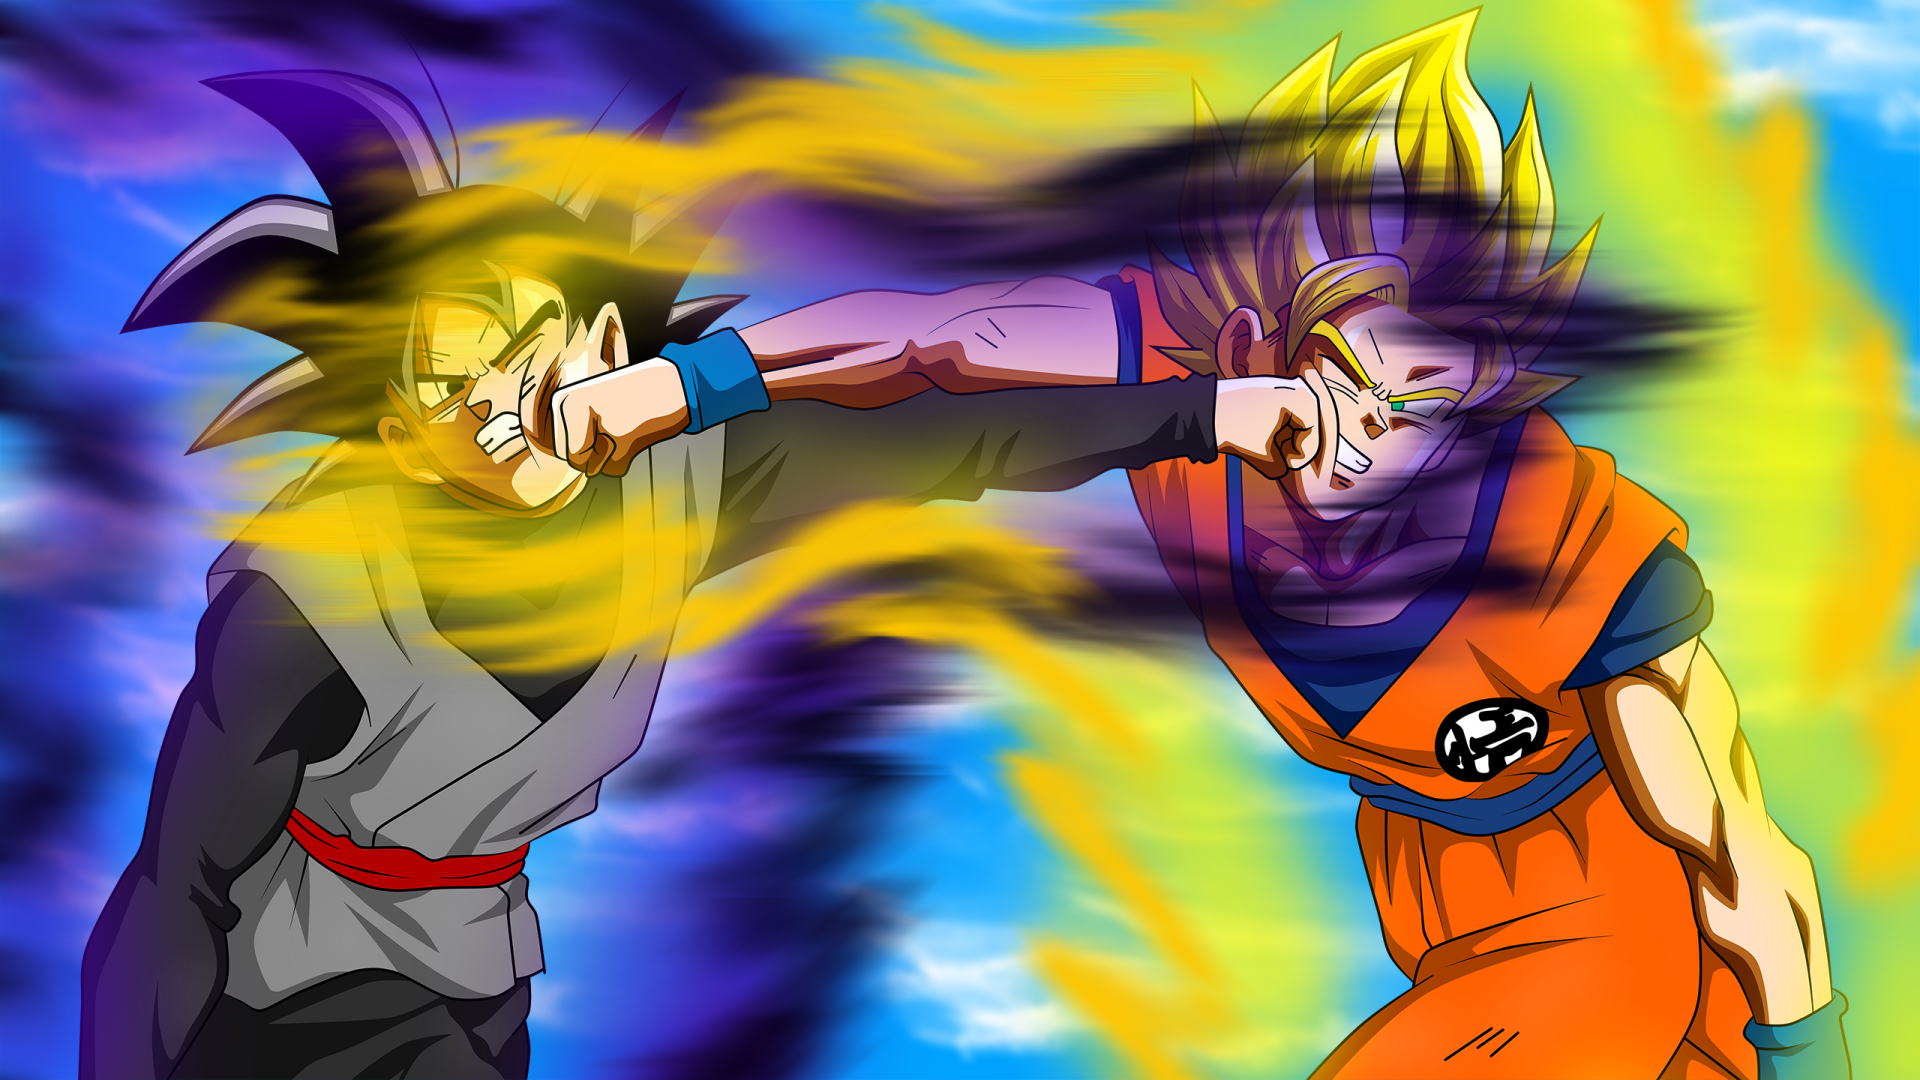 Download Goku Black Goku Anime Dragon Ball Super Hd Wallpaper By Sadman Sakib 3439